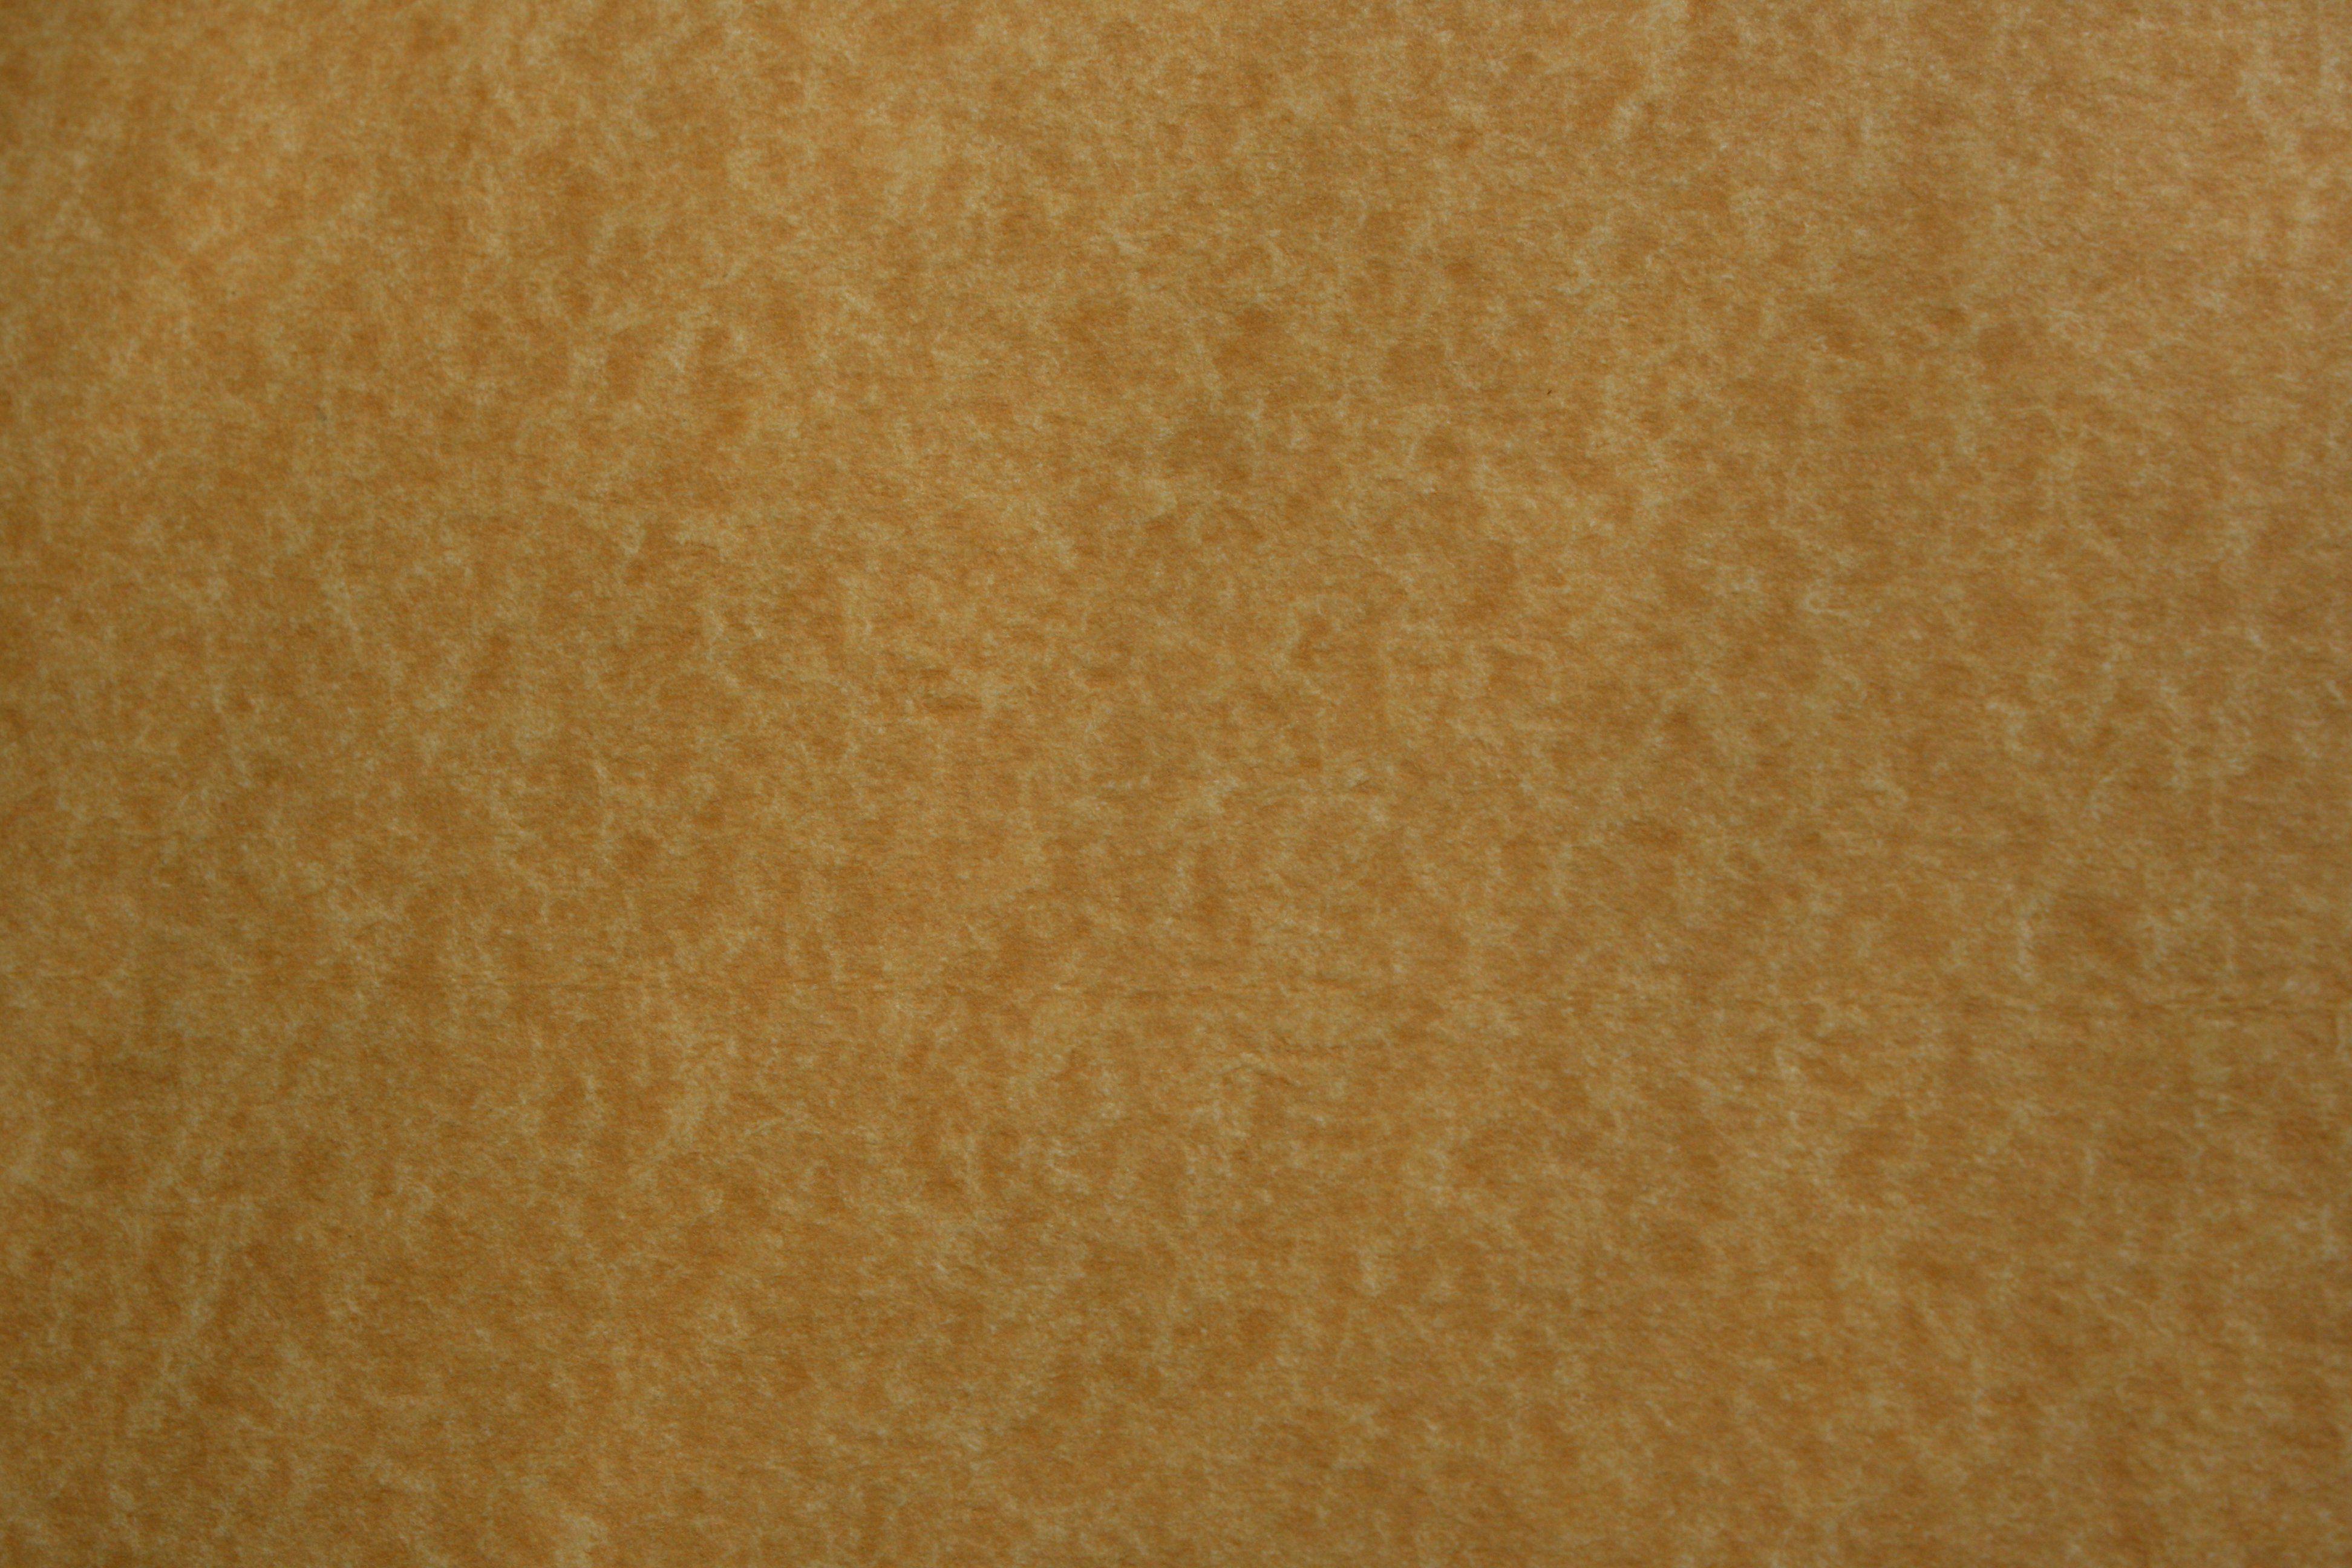 Tiled Background For Websites paper. Parchment Paper Texture